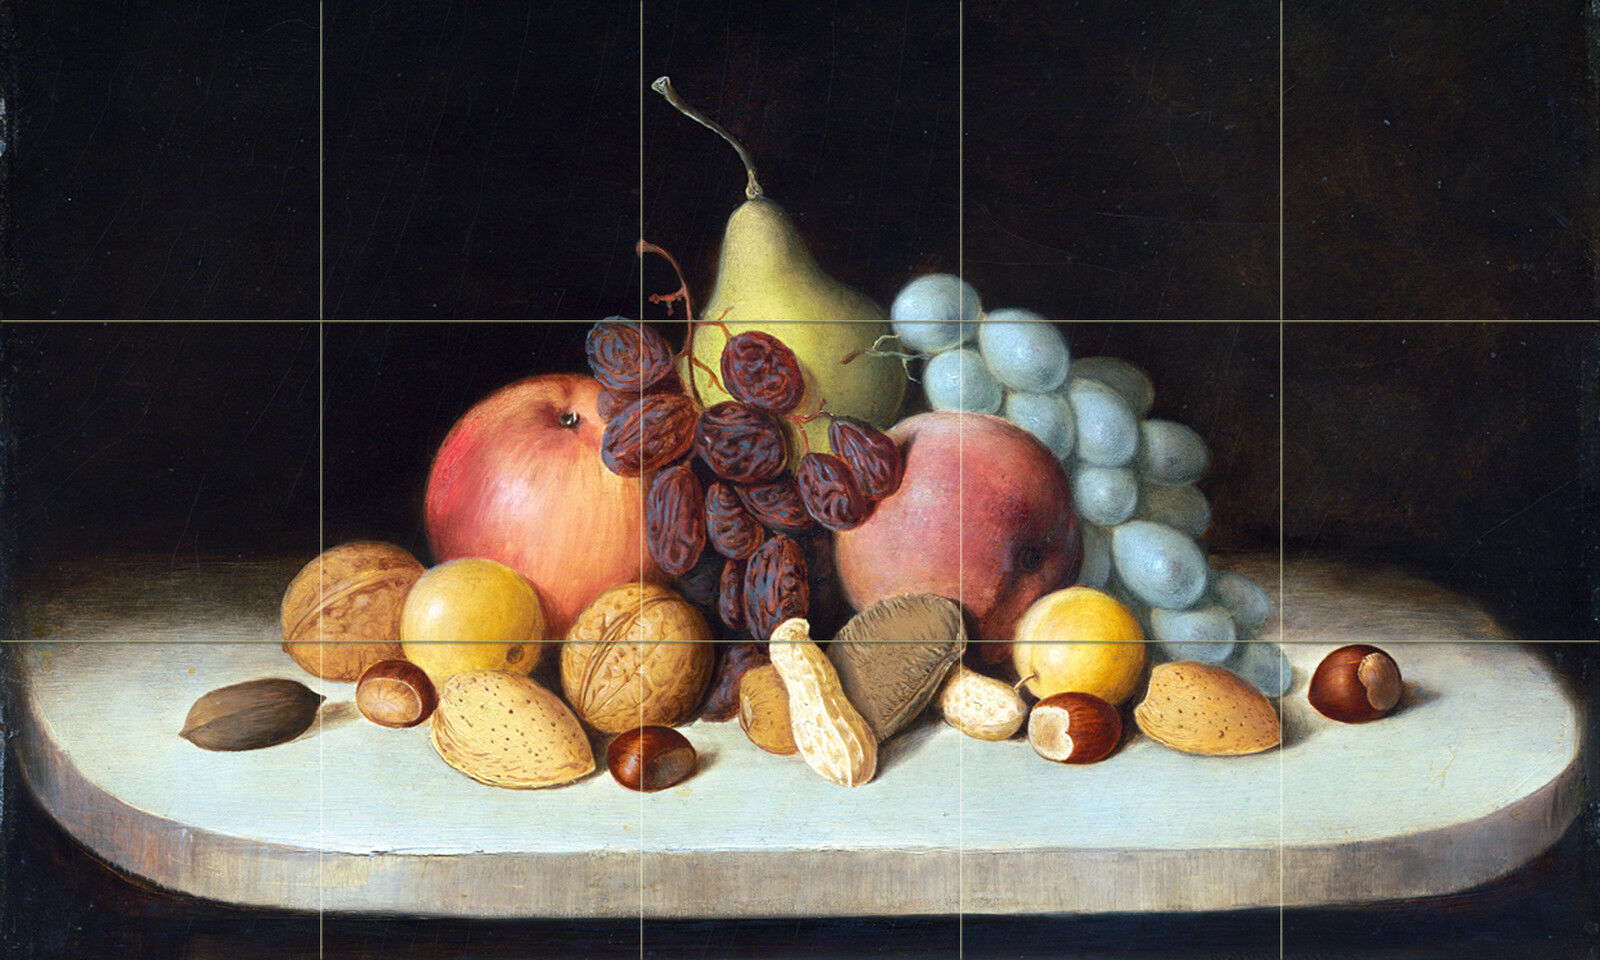 30 x 18 Art Fruit and Nuts Ceramic Mural Backsplash Bath Tile #2410